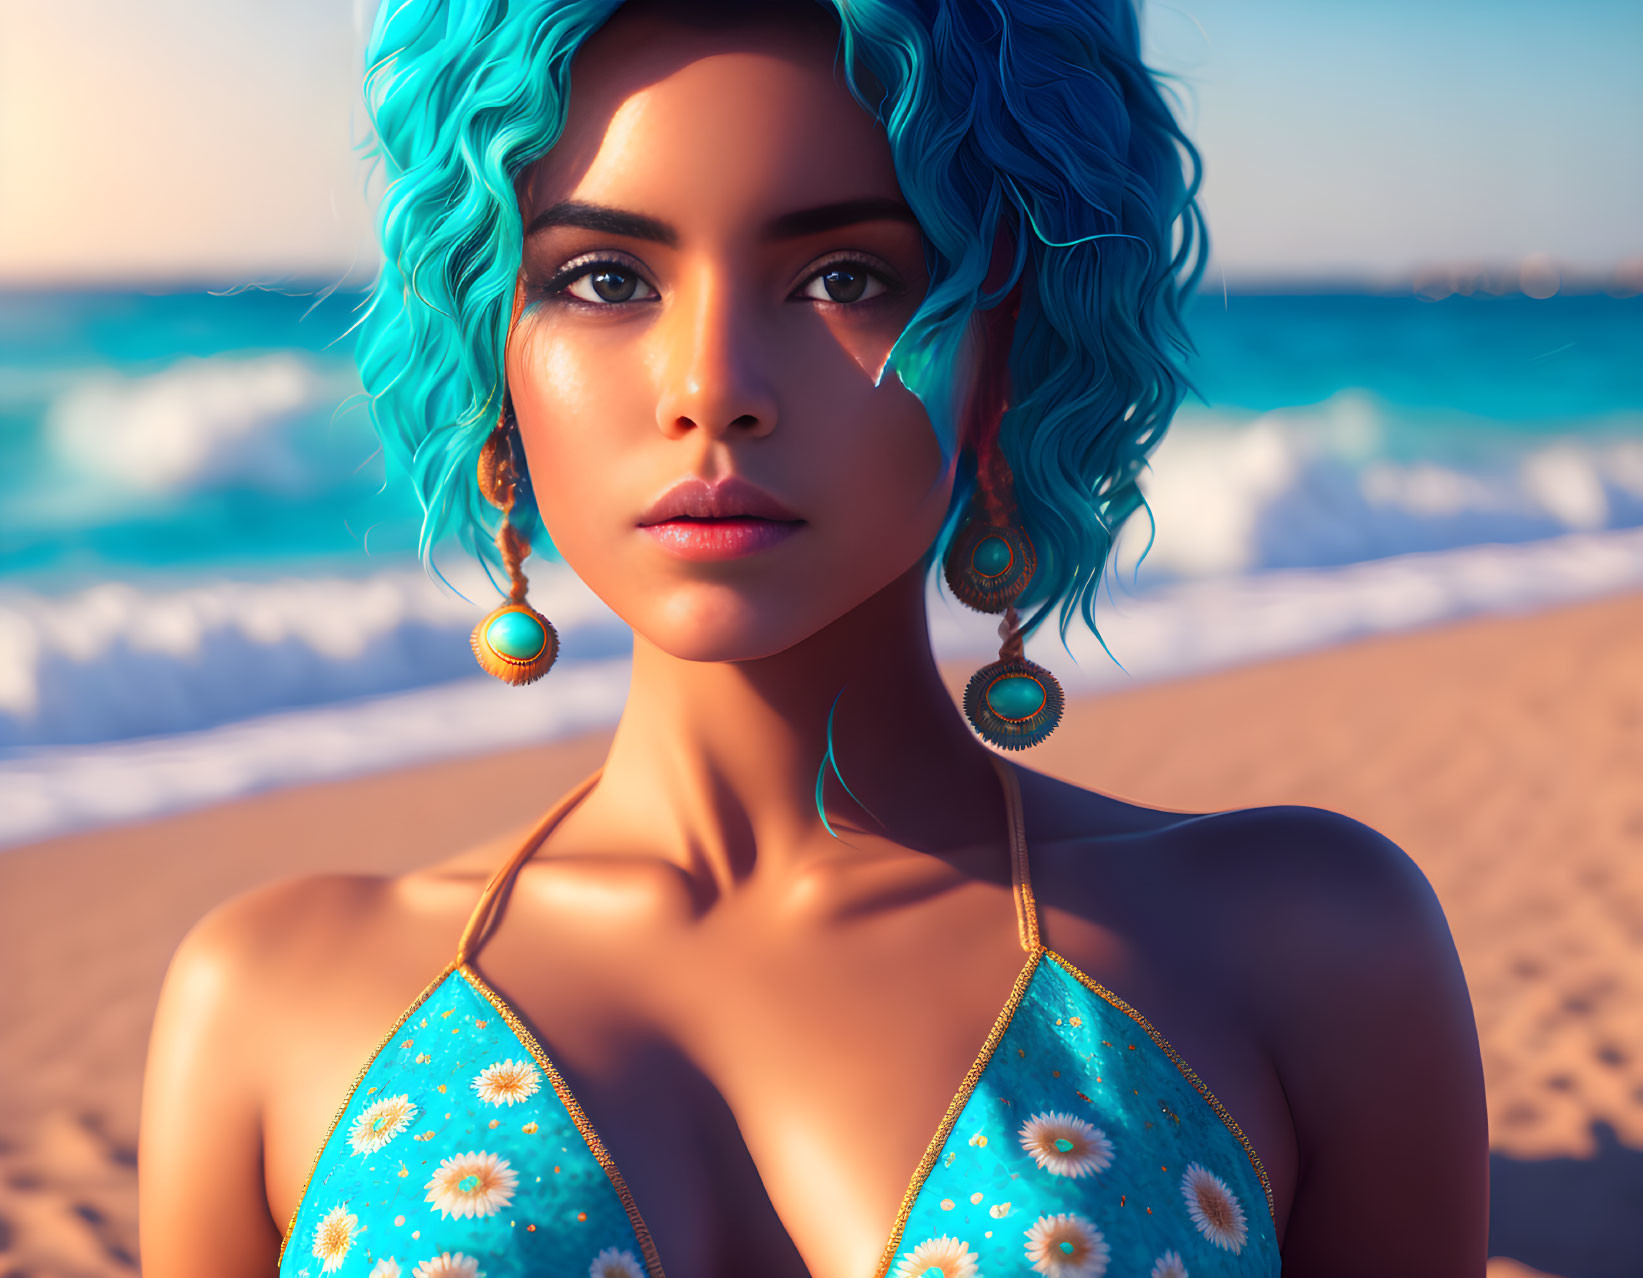 Woman with Blue Hair in Bikini and Earrings against Beach Background